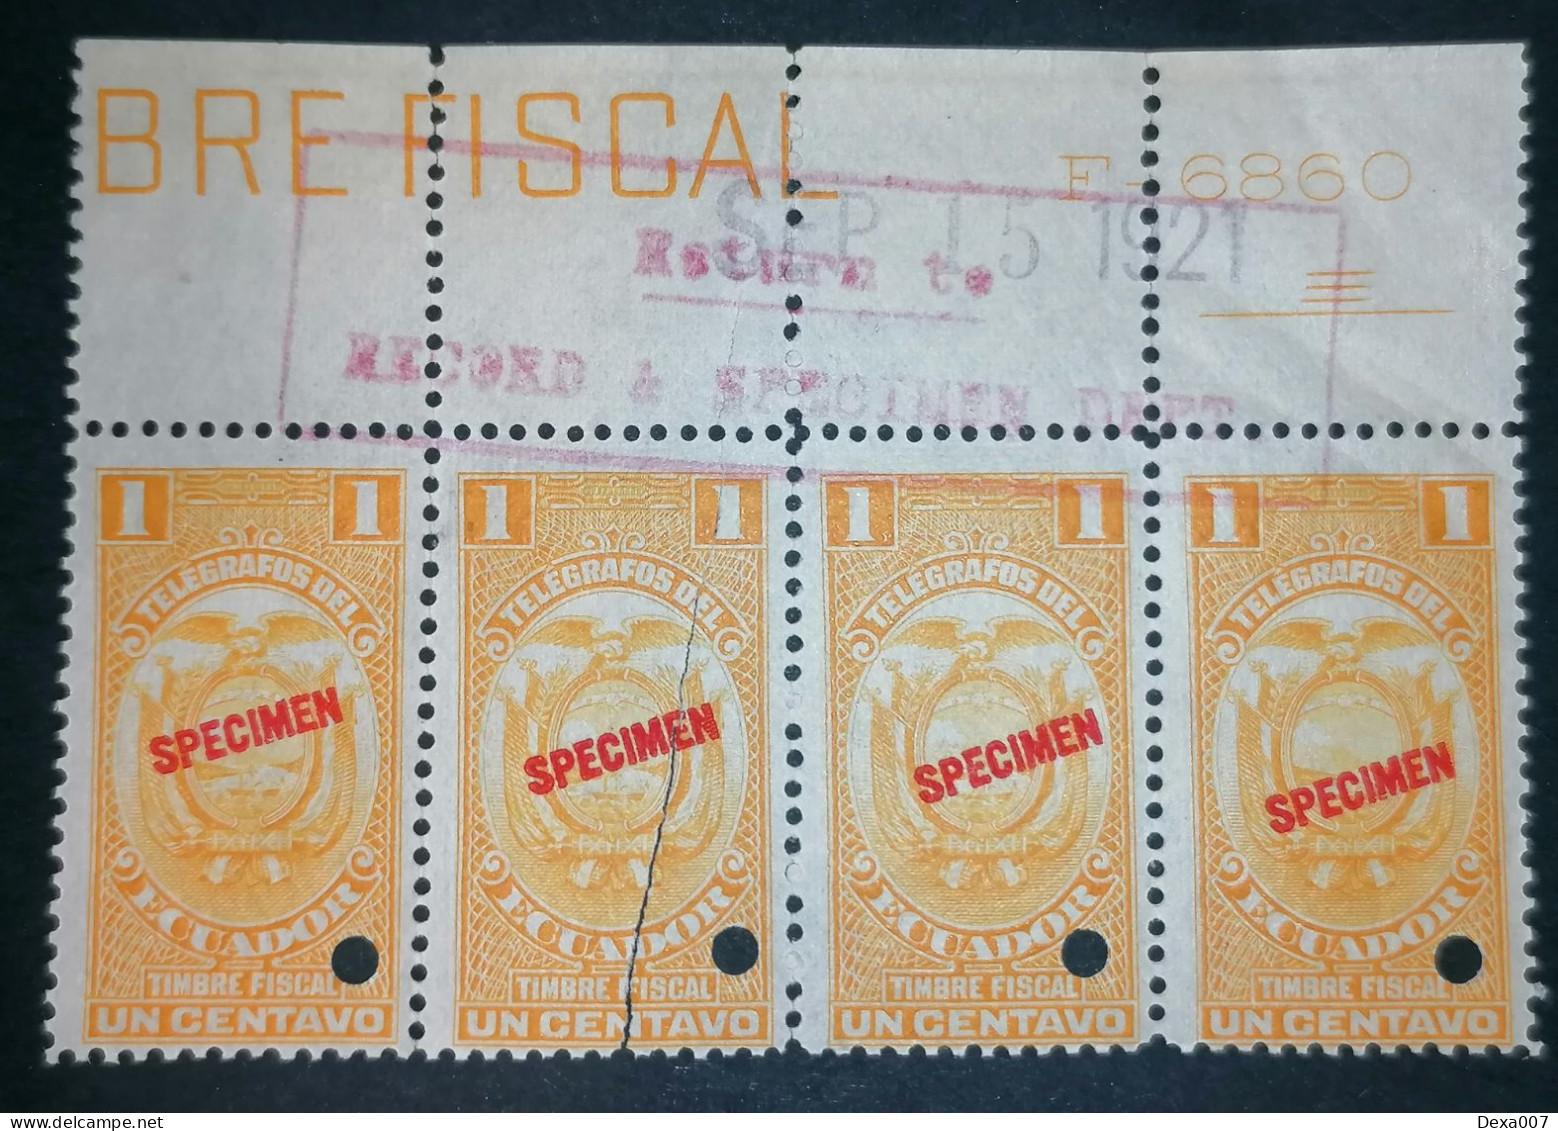 Ecuador 1 Centavo Revenue Stamp Specimen Overprint Block Of 4 - Ecuador